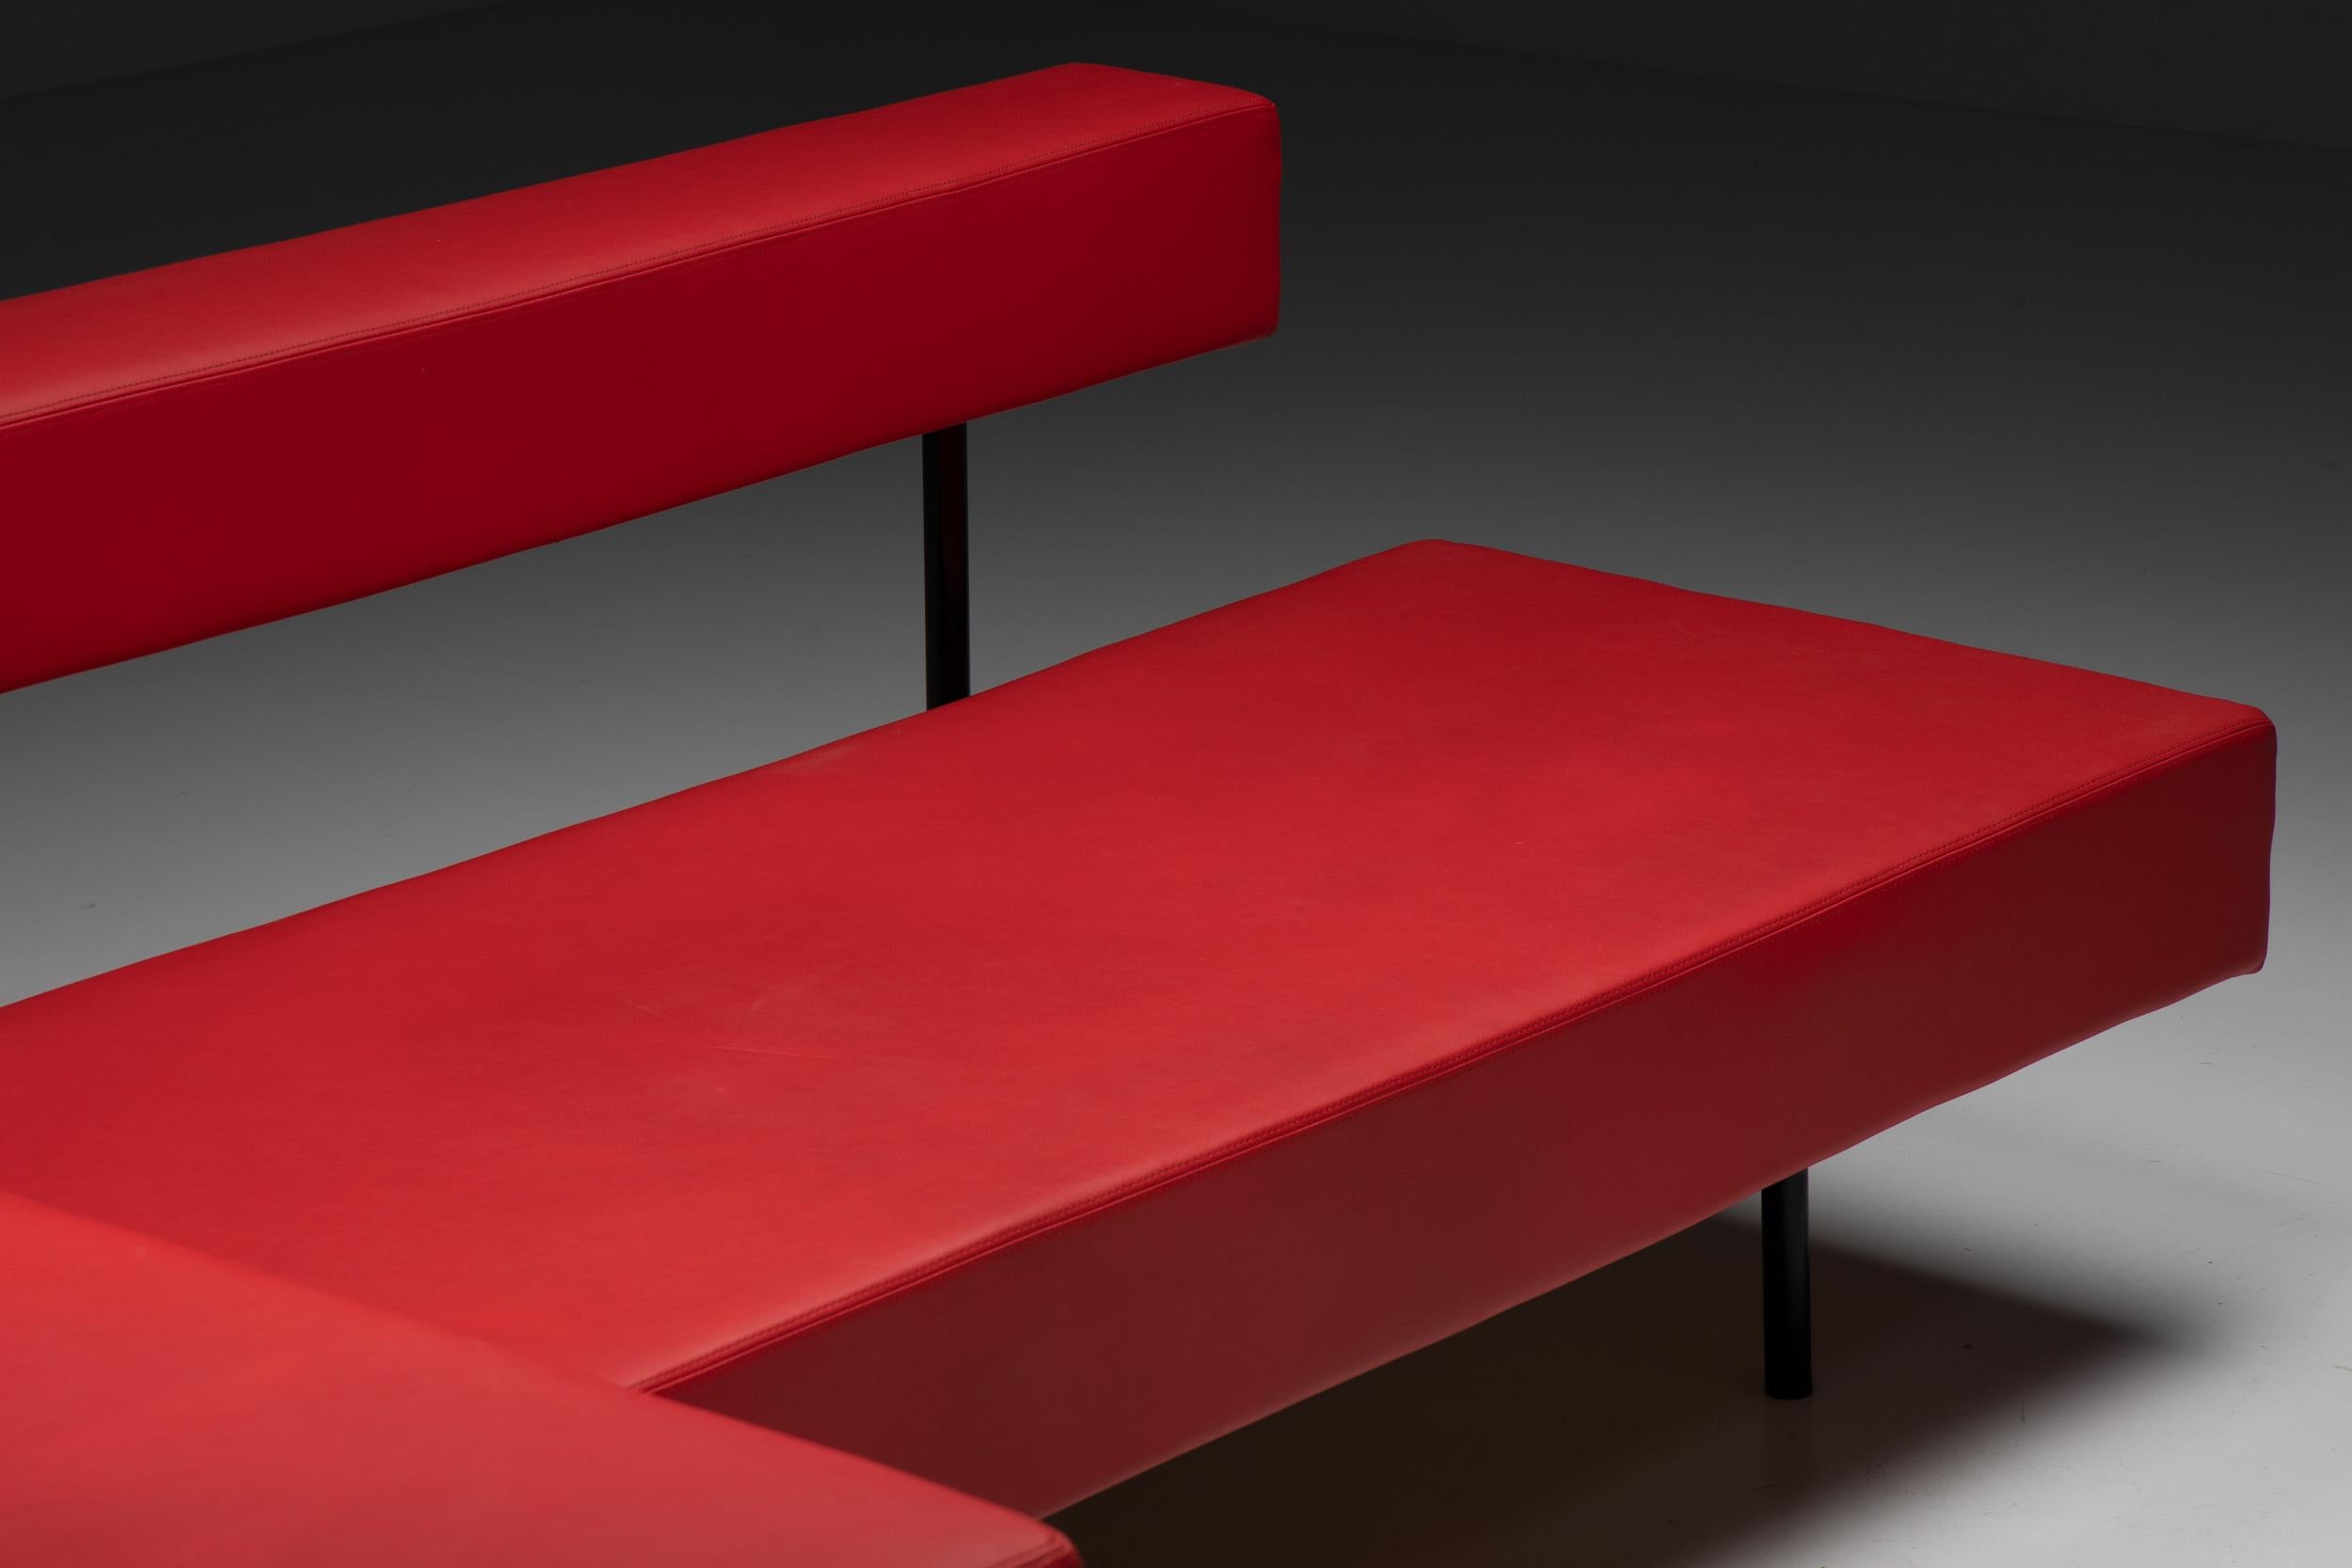 Metal Postmodern Rectangular Red Architectural Sofa, Belgian Design, Prototype, 2000's For Sale